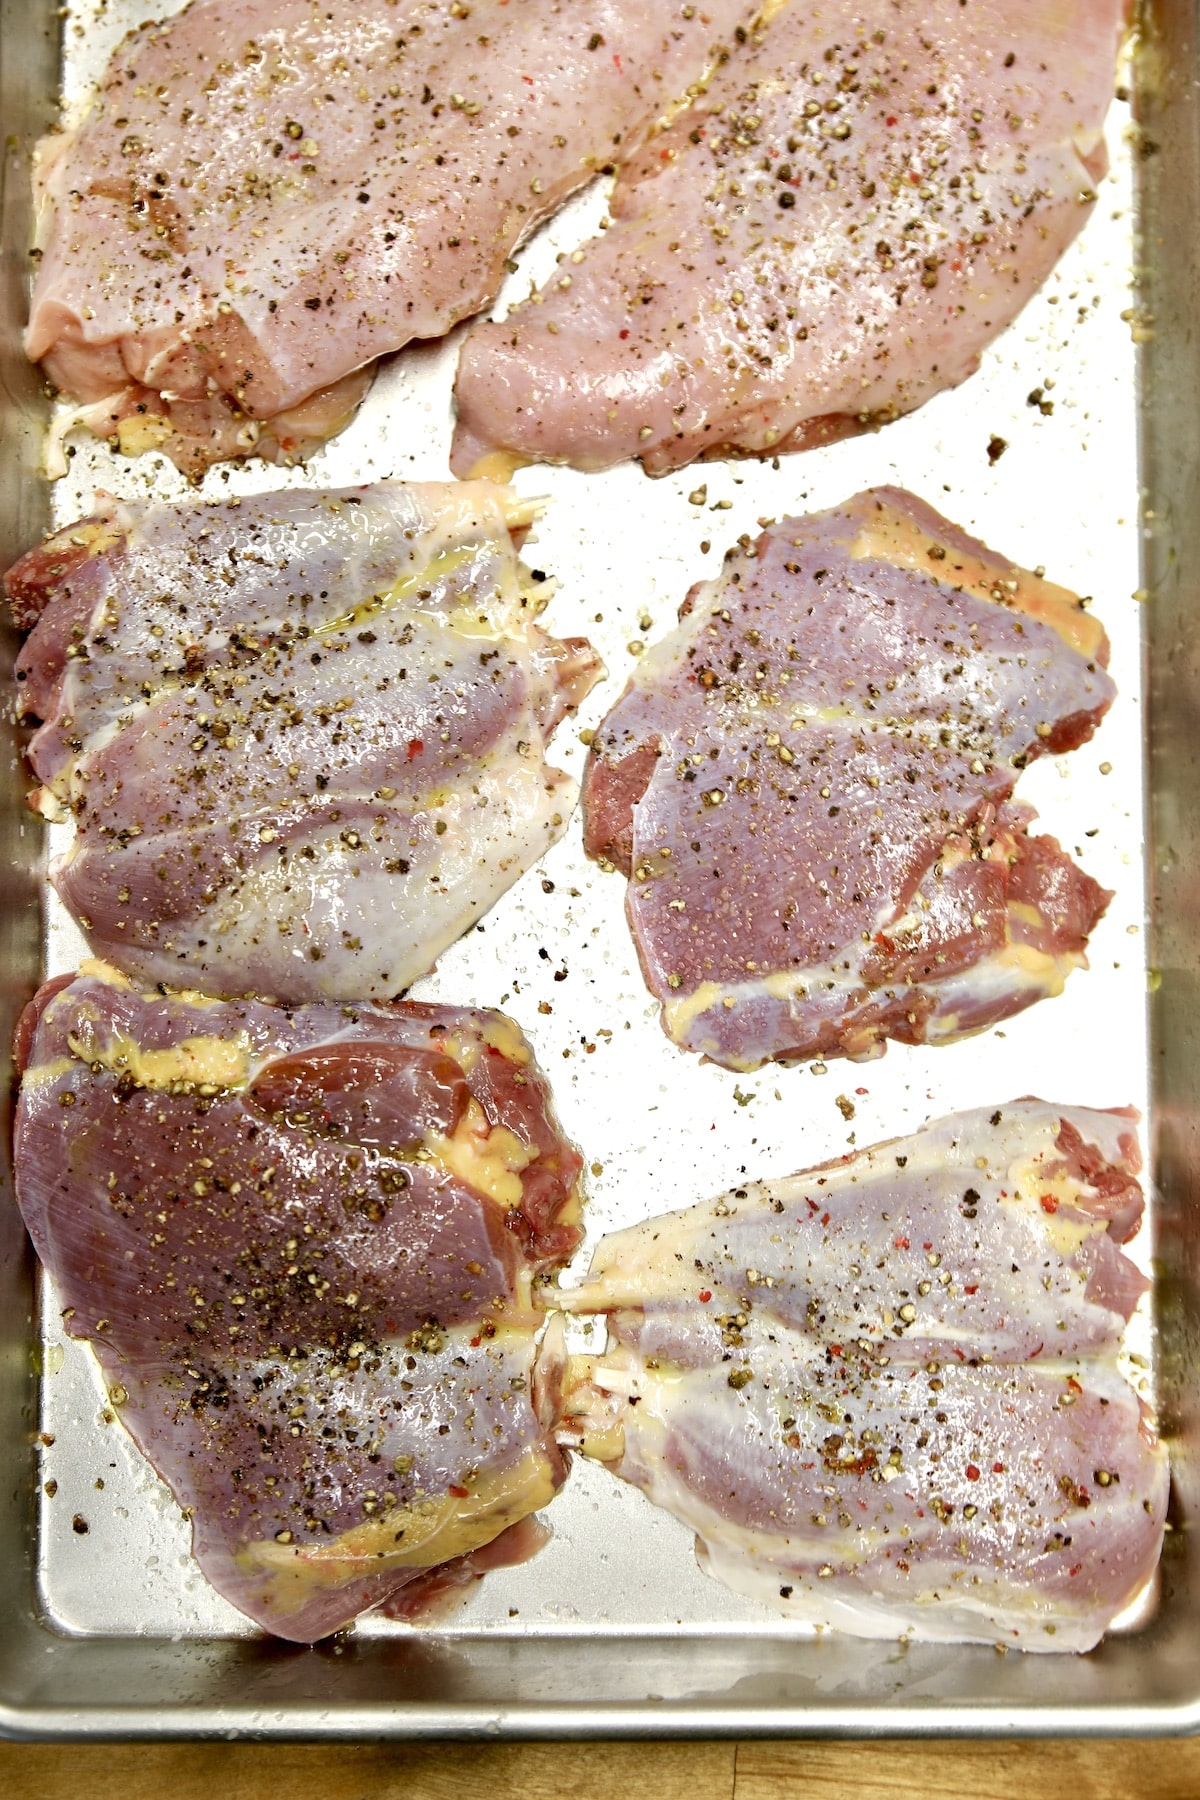 Sheet pan with boneless skinless chicken pieces.